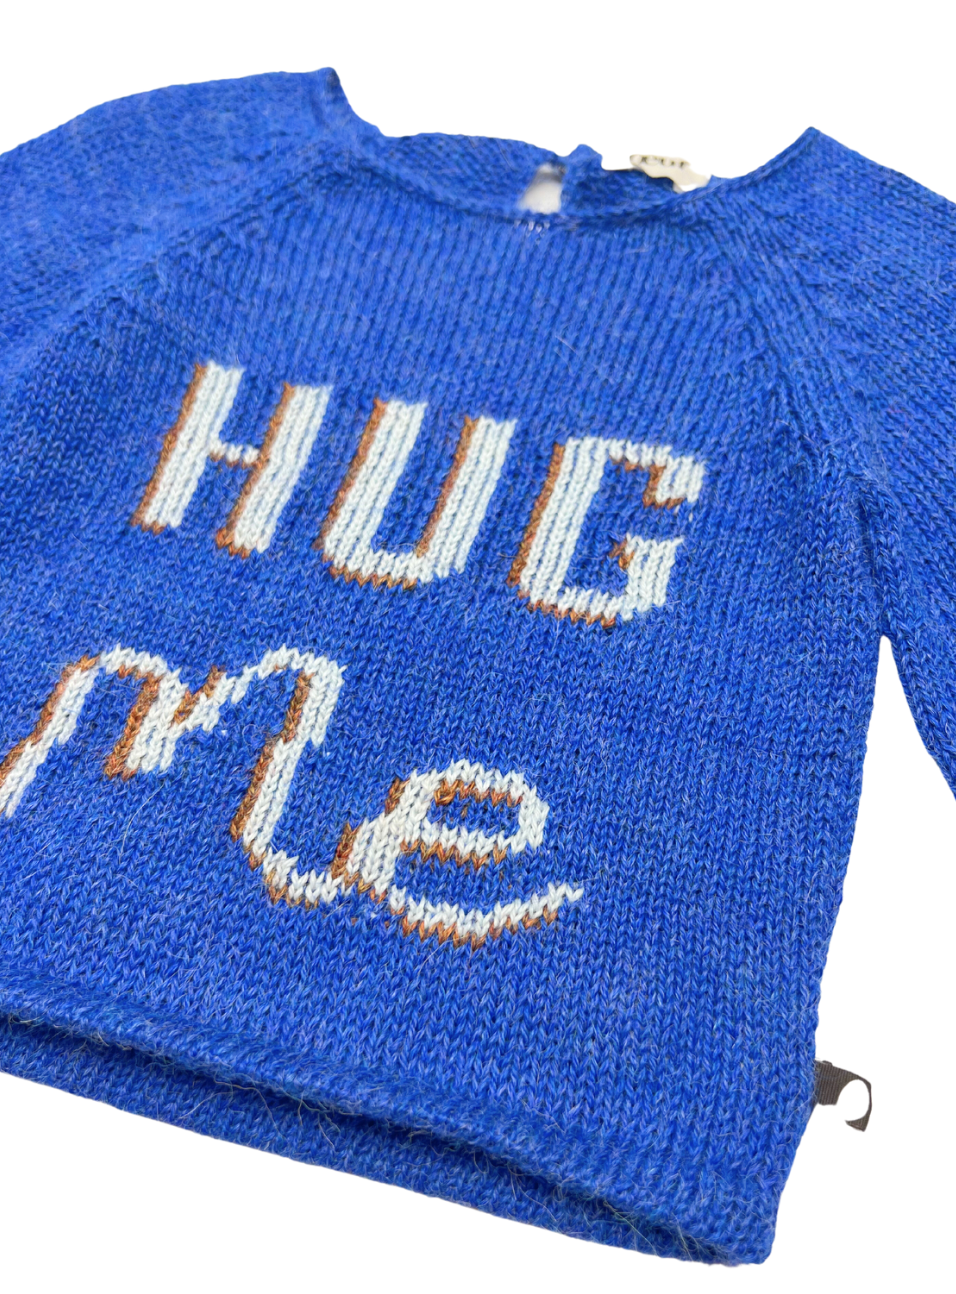 OEUF NYC - Pull "Hug Me" baby alpaca - 12 mois